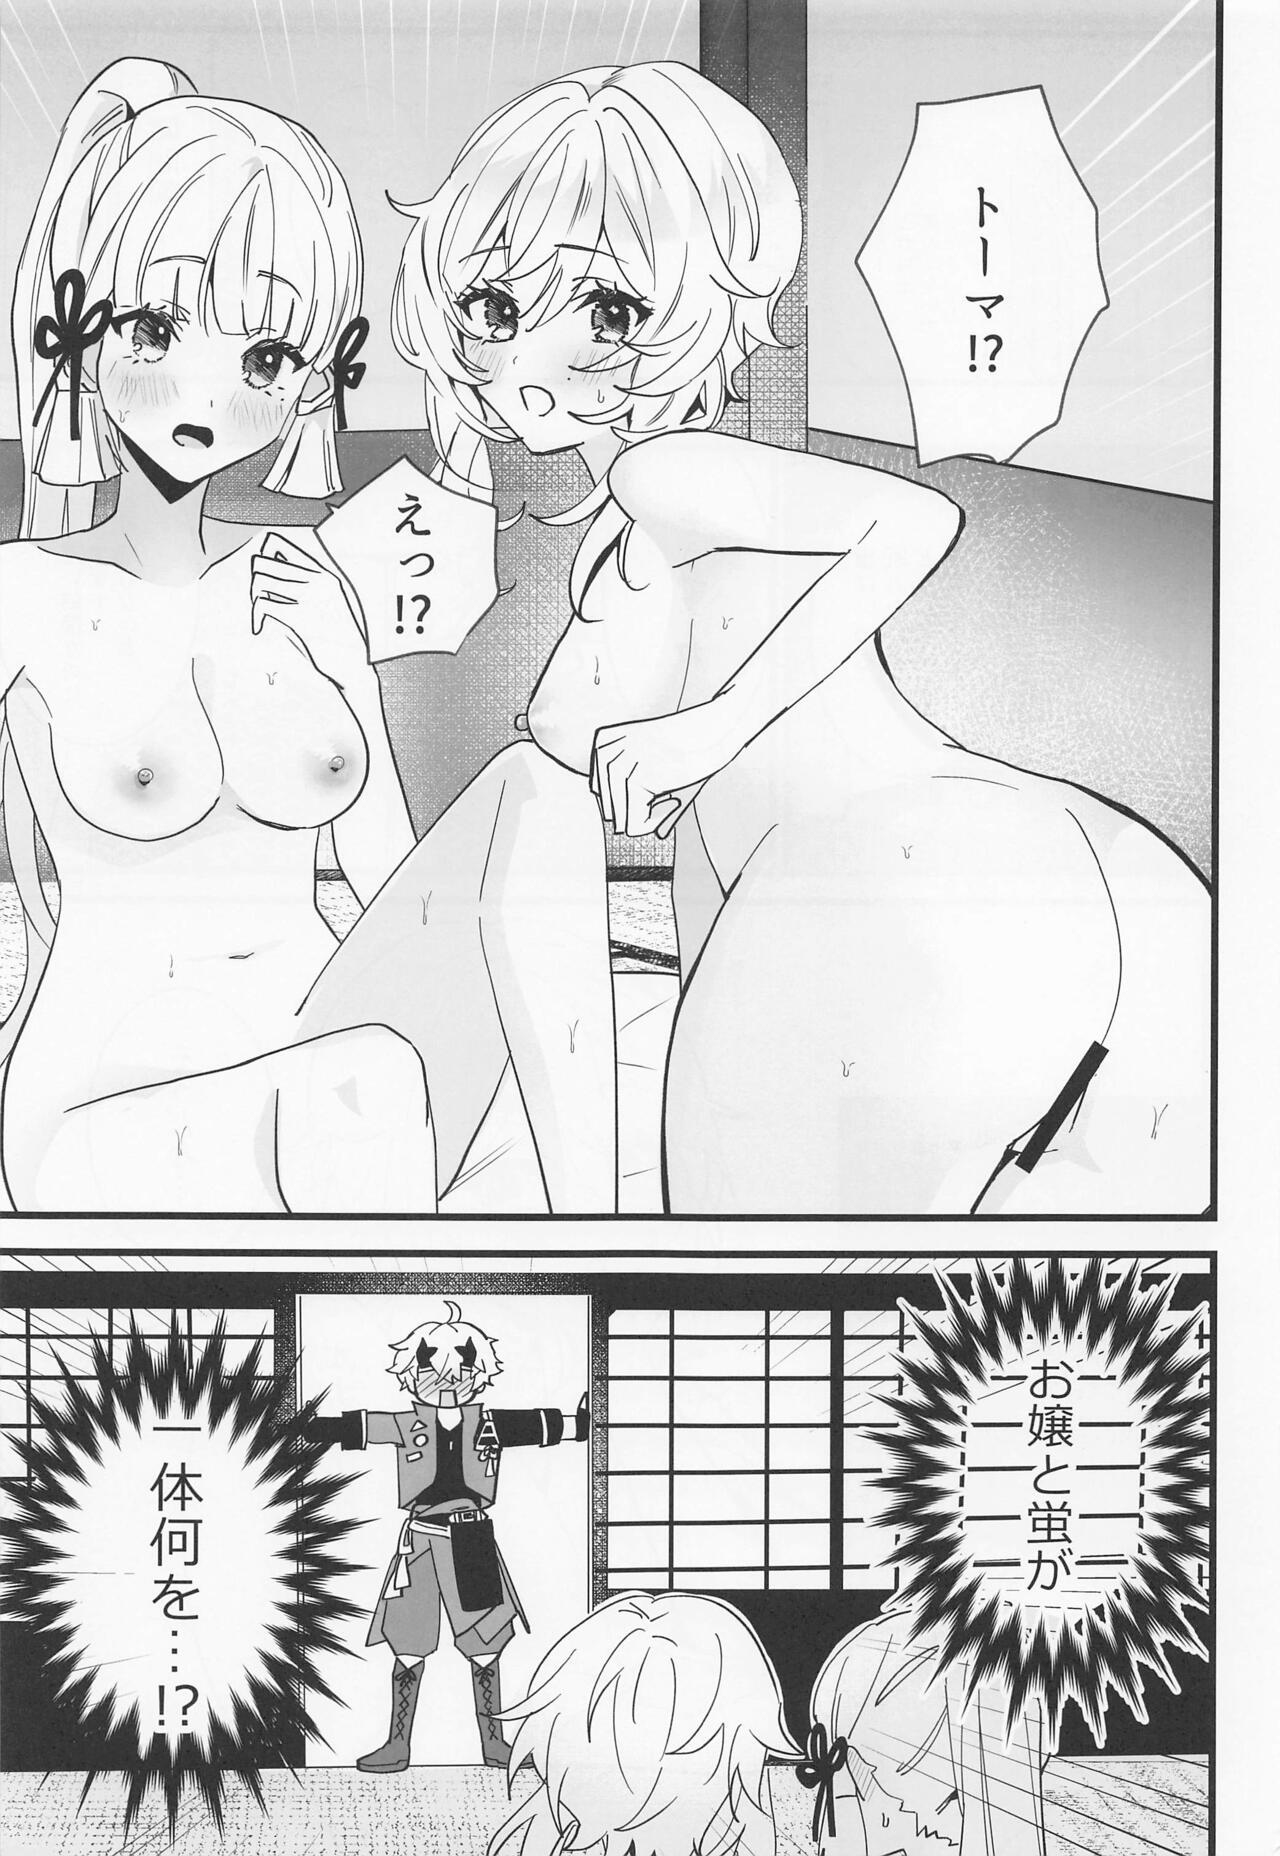 Blond hotarugaayakanionanioshietetomagamakikomareruhon - Genshin impact  - Page 4